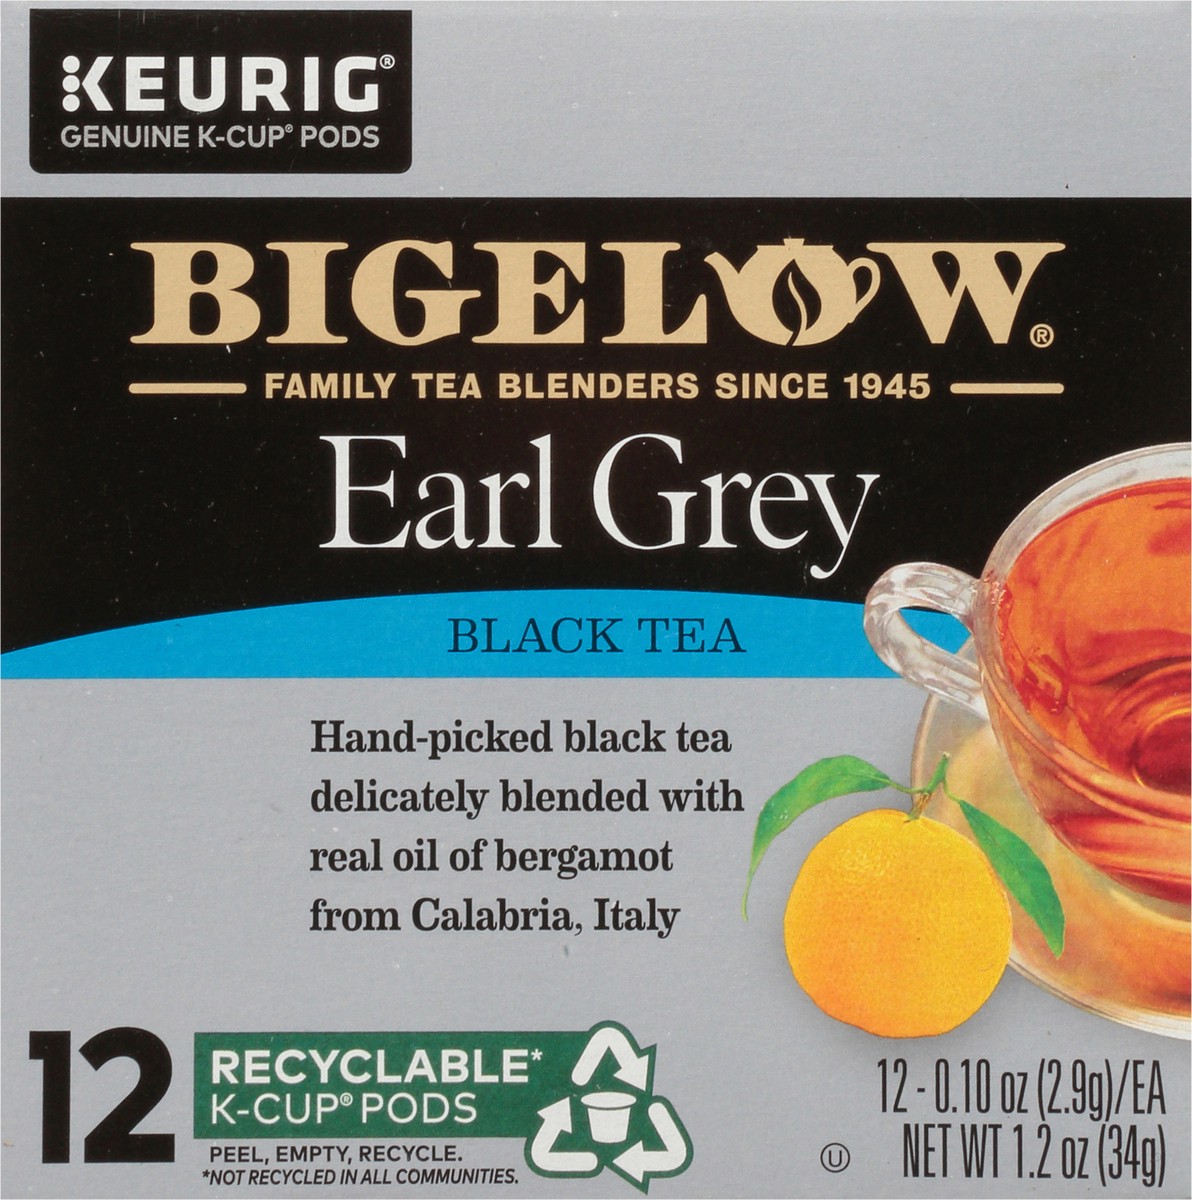 slide 11 of 13, Bigelow Earl Grey Black Tea 12 ct K-Cup Pods 1.2 oz. Box - 12 ct, 12 ct